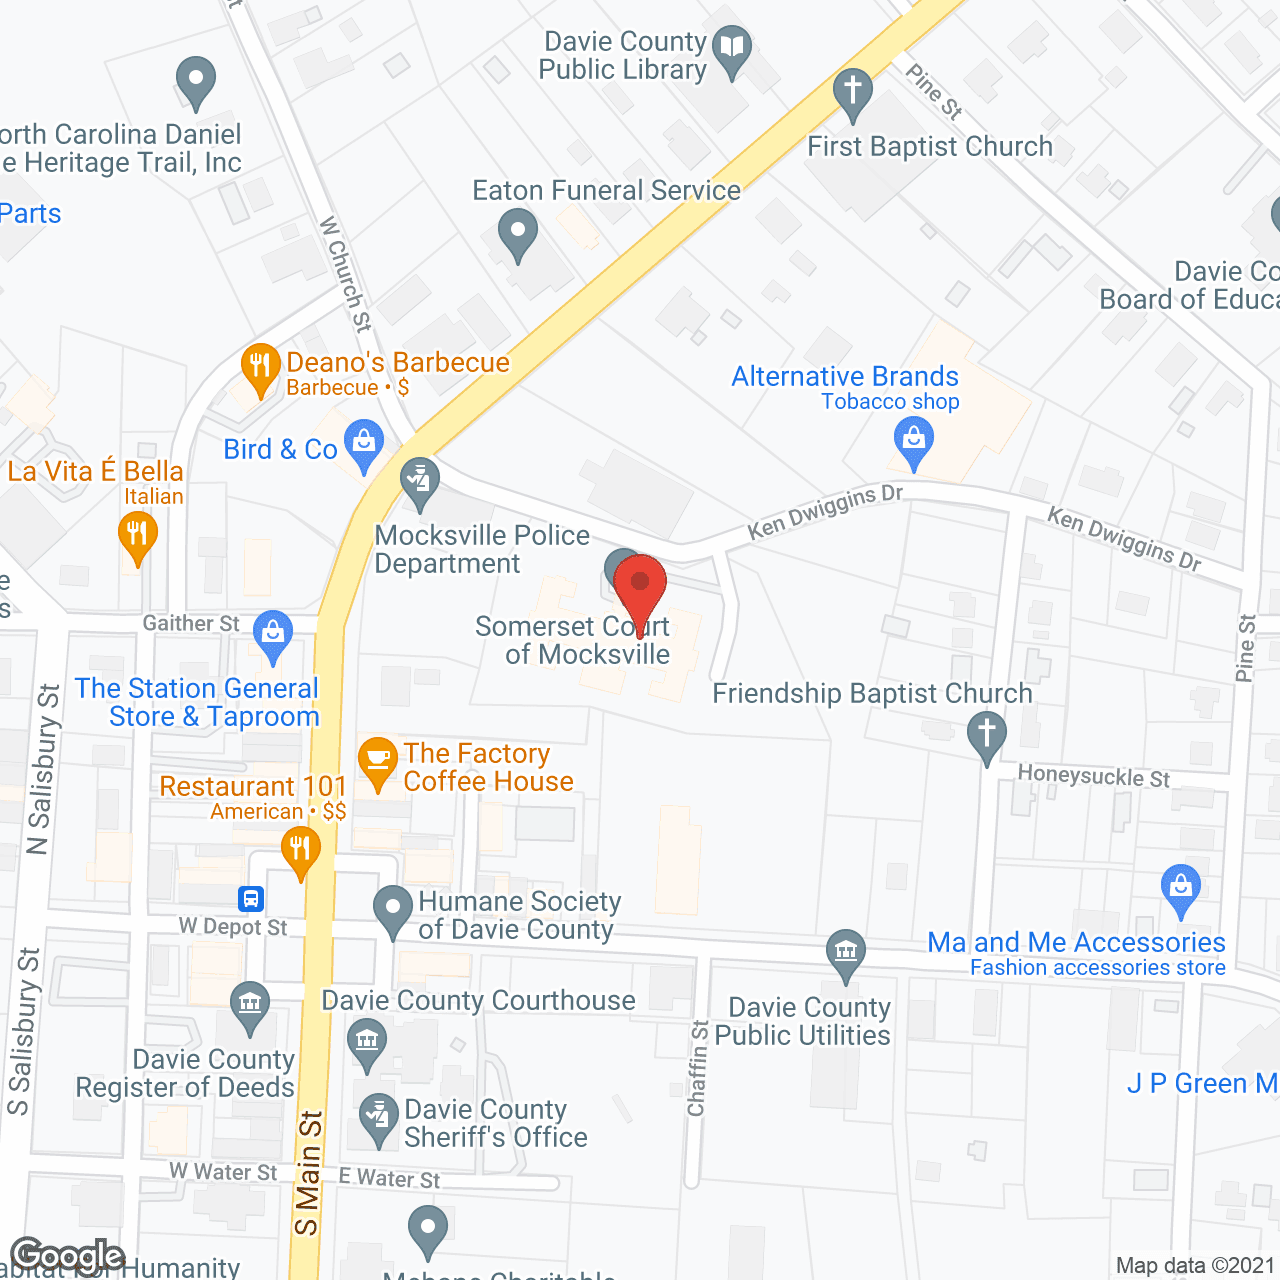 Somerset Court of Mocksville in google map